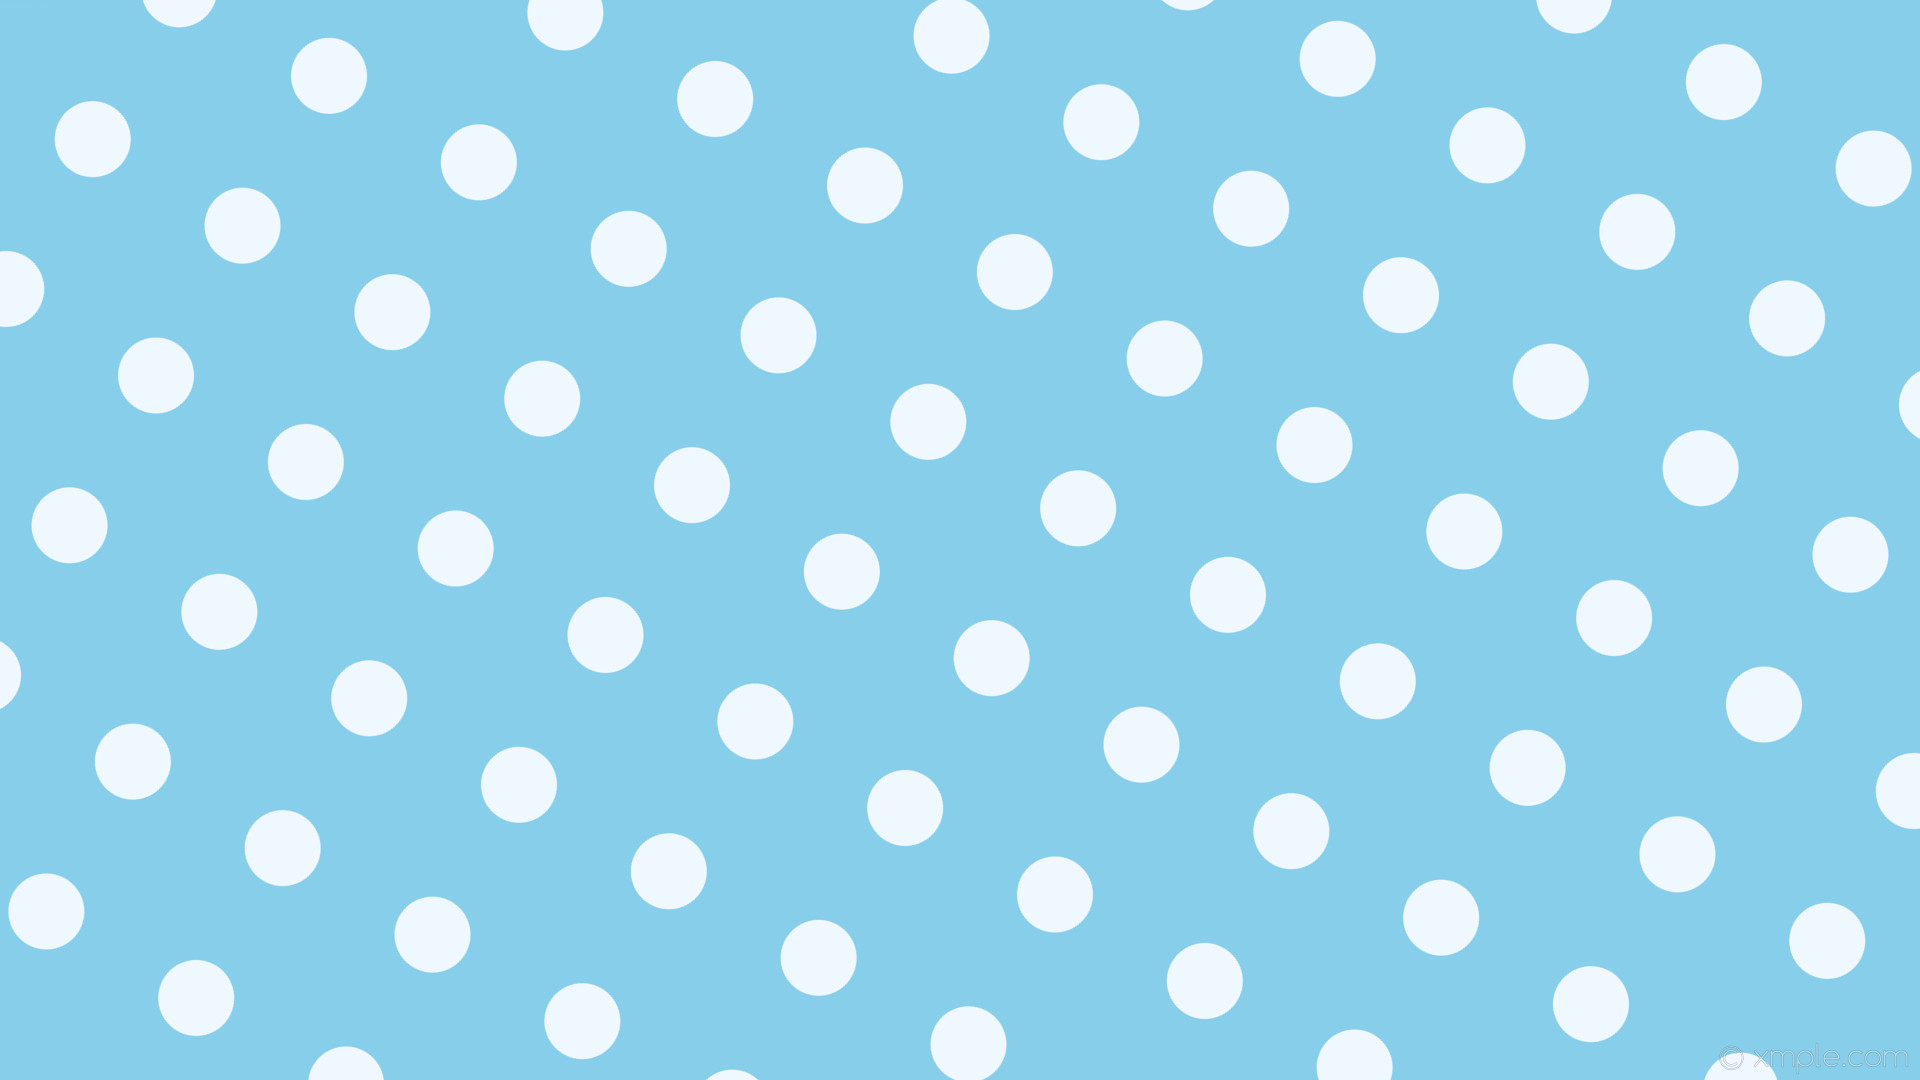 wallpaper dots spots white blue polka sky blue alice blue #87ceeb #f0f8ff  150Â°